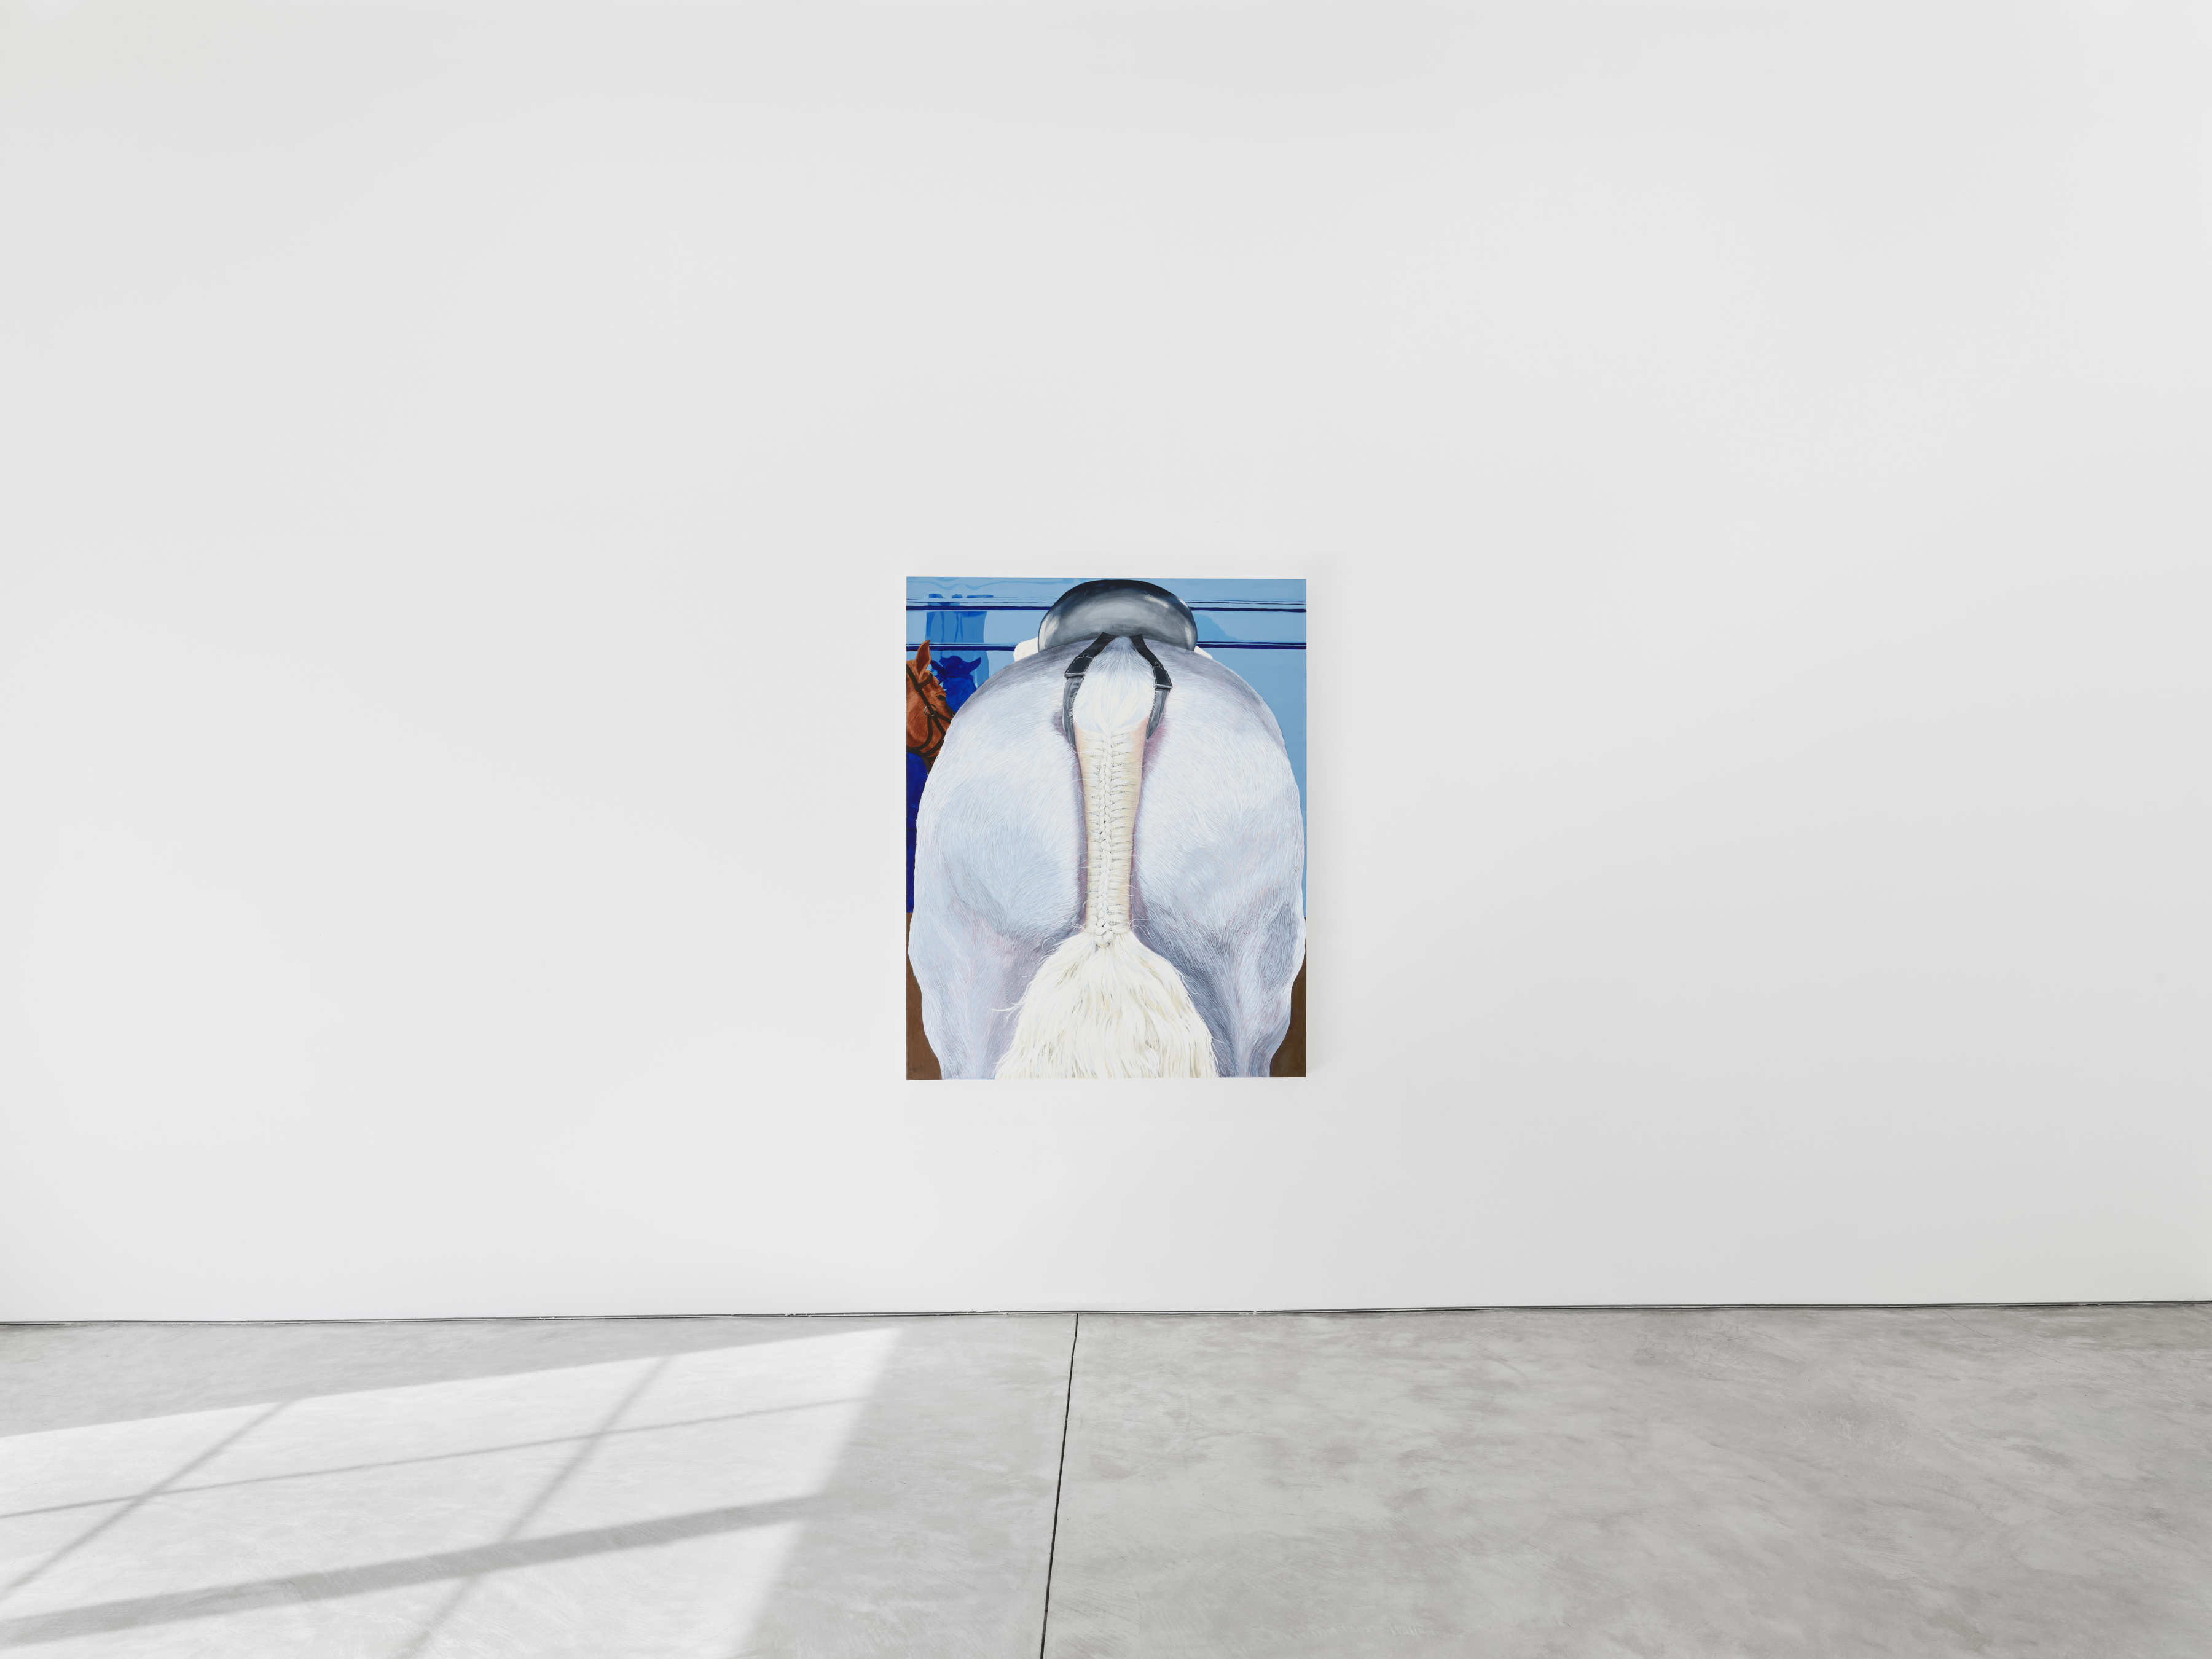 Sarah Miska, Swept, installation view, 2022